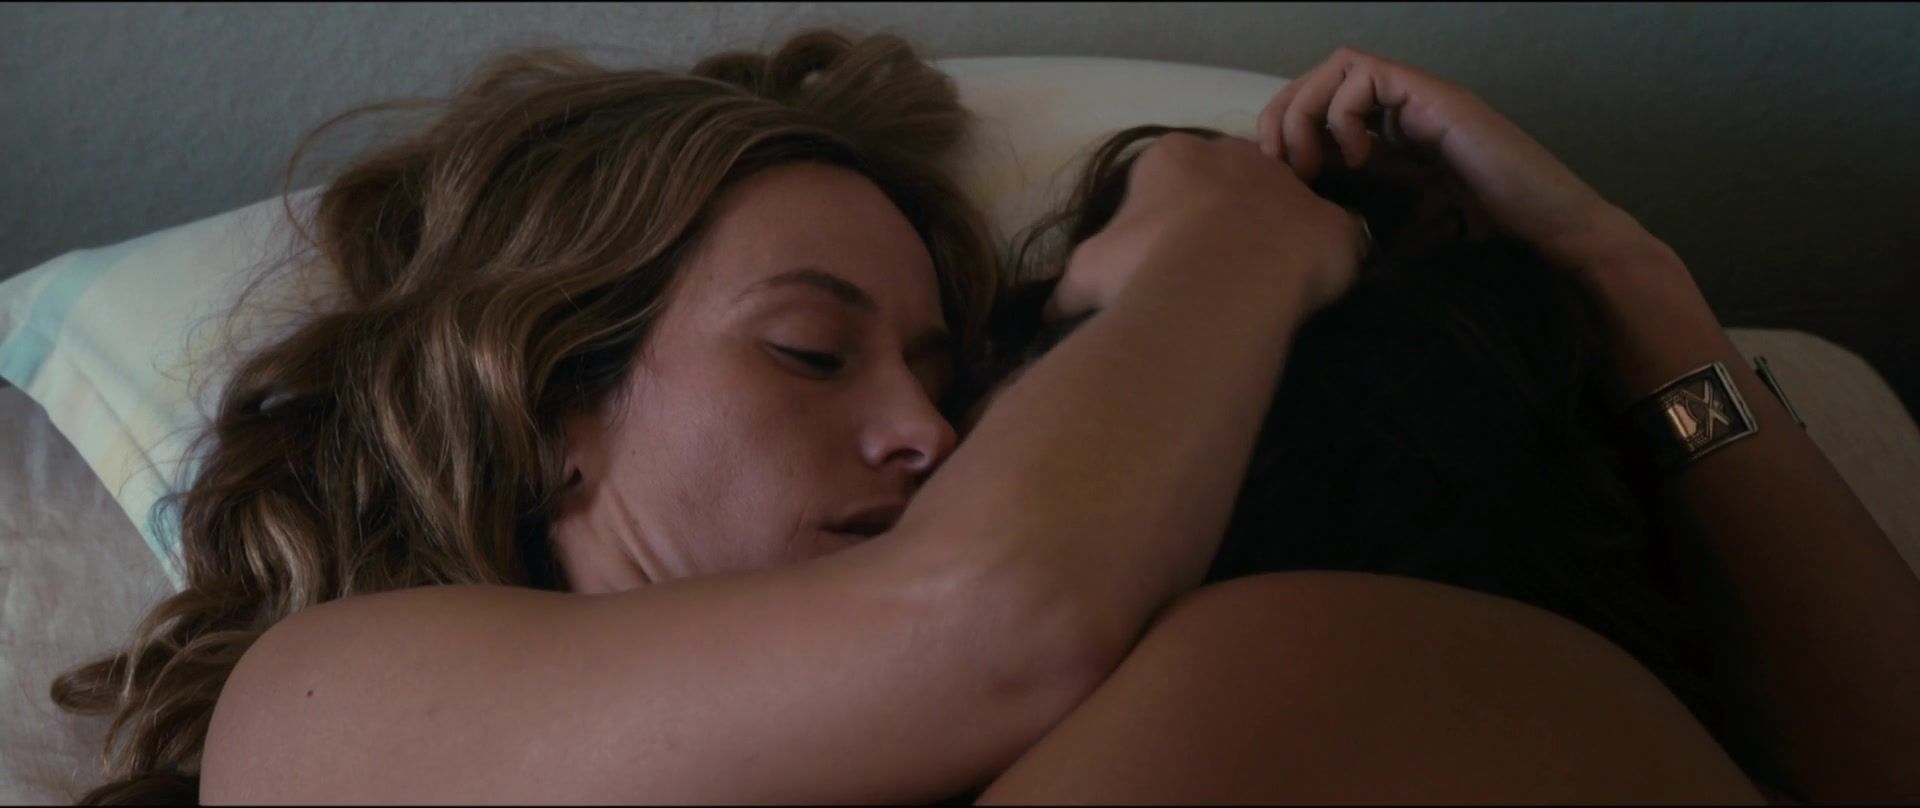 Girls Fucking Outdoors Lesbian Sex Video of French erotic film "La belle saison" BootyTape